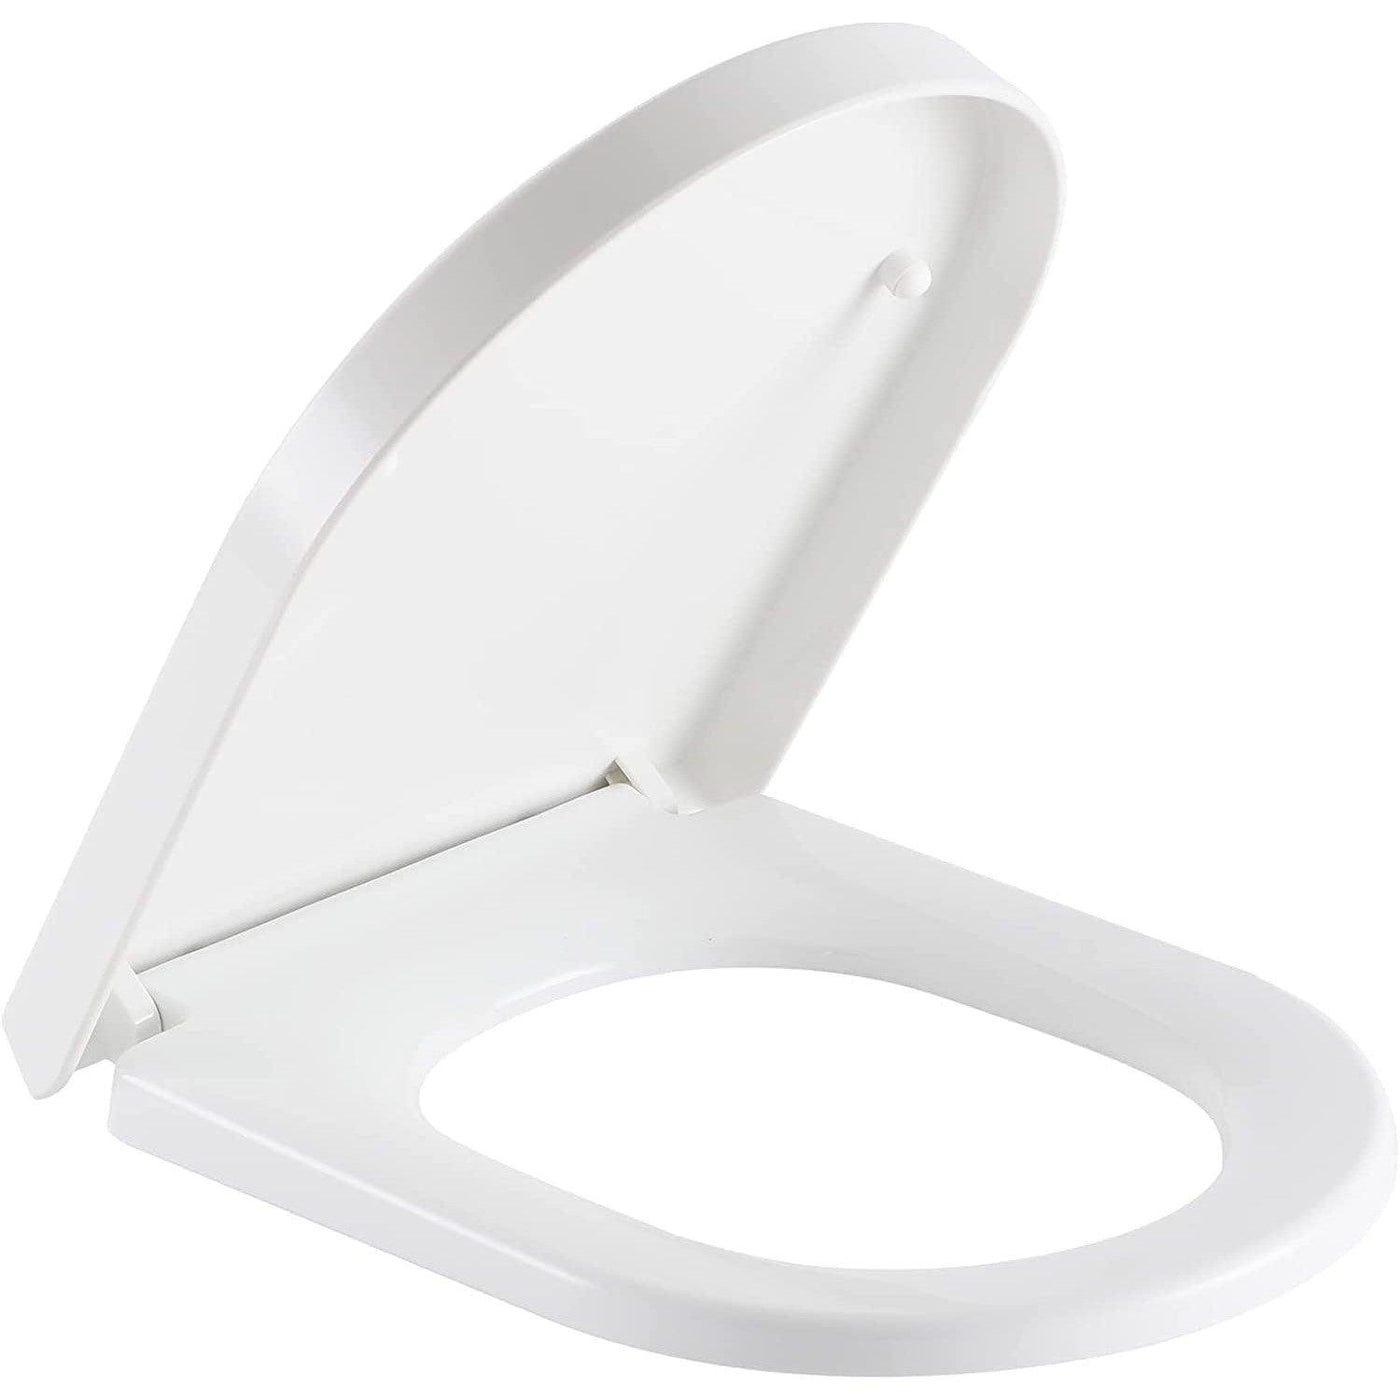 SADALAK Soft Close D-Shaped Toilet Seat Quick Release Hinges, White - Massive Discounts